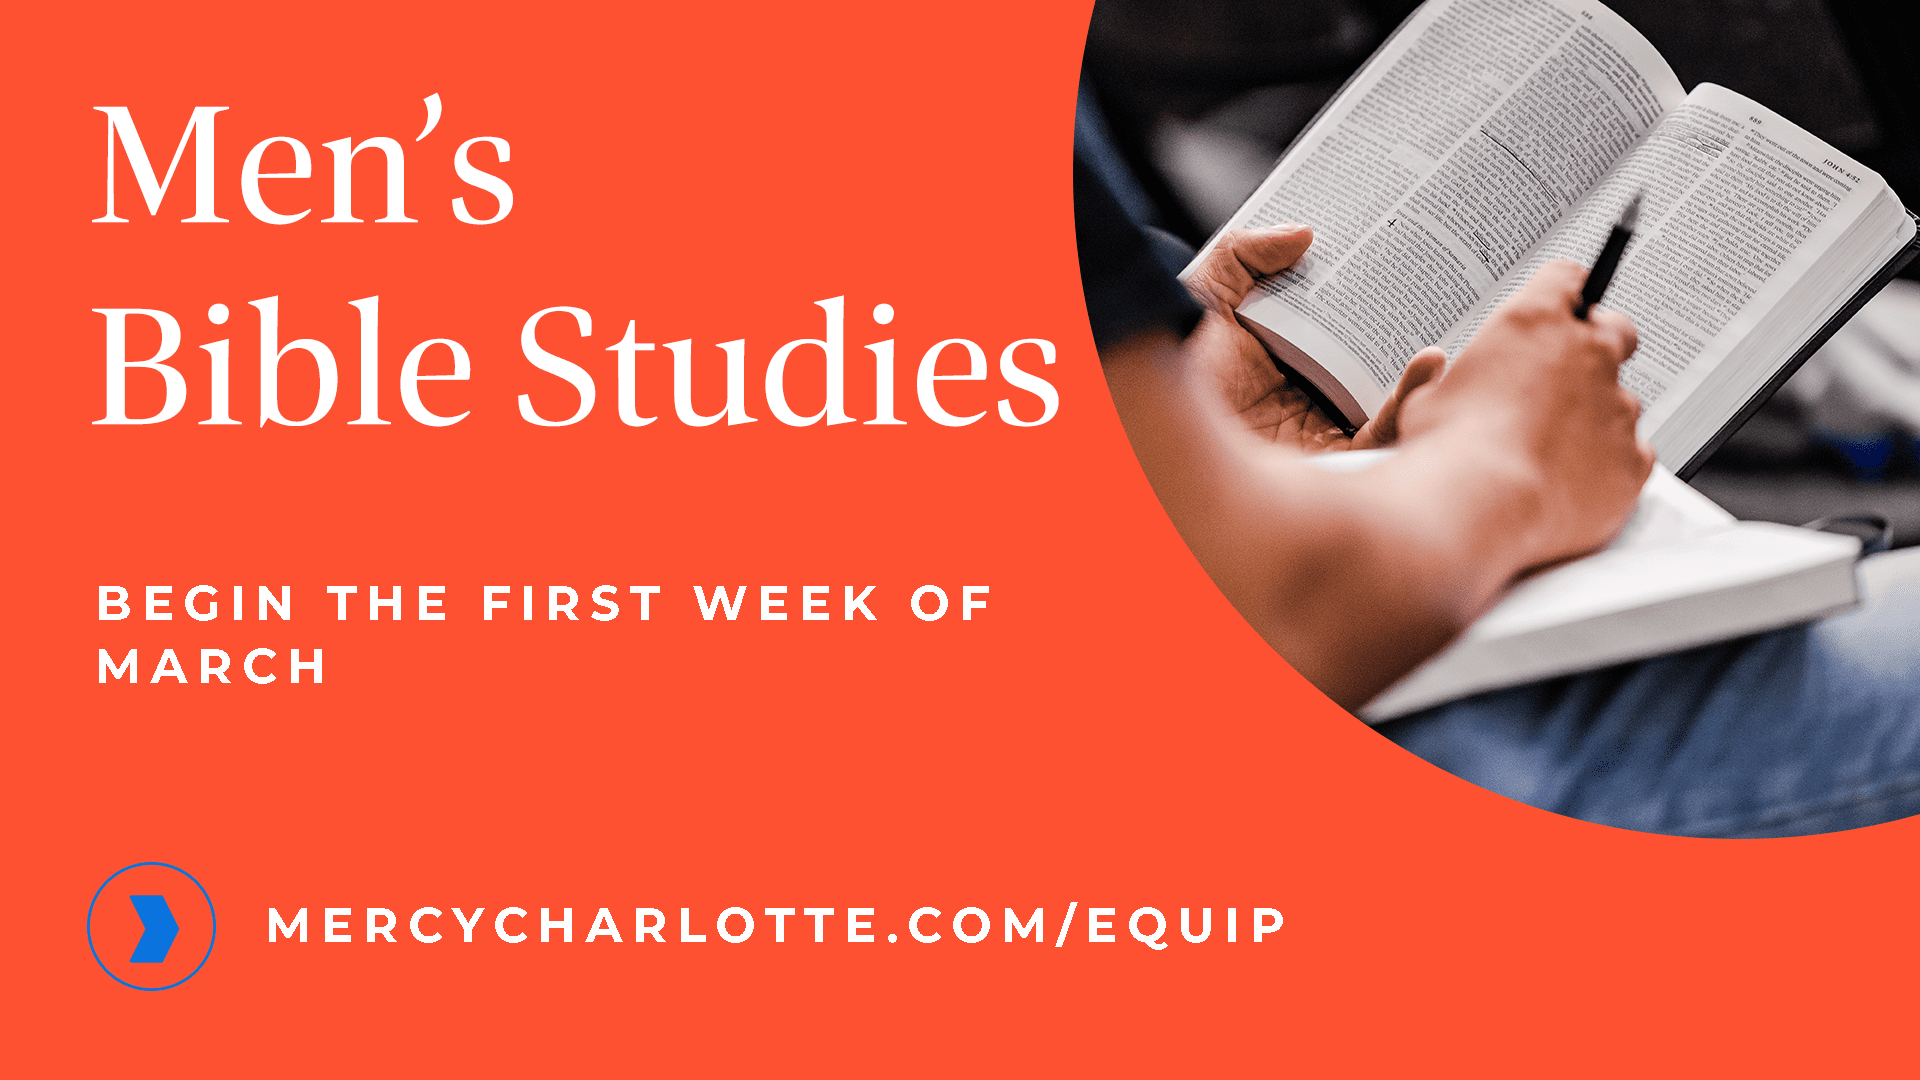 Mens Bible Studies Starting in March - Men's Bible Studies